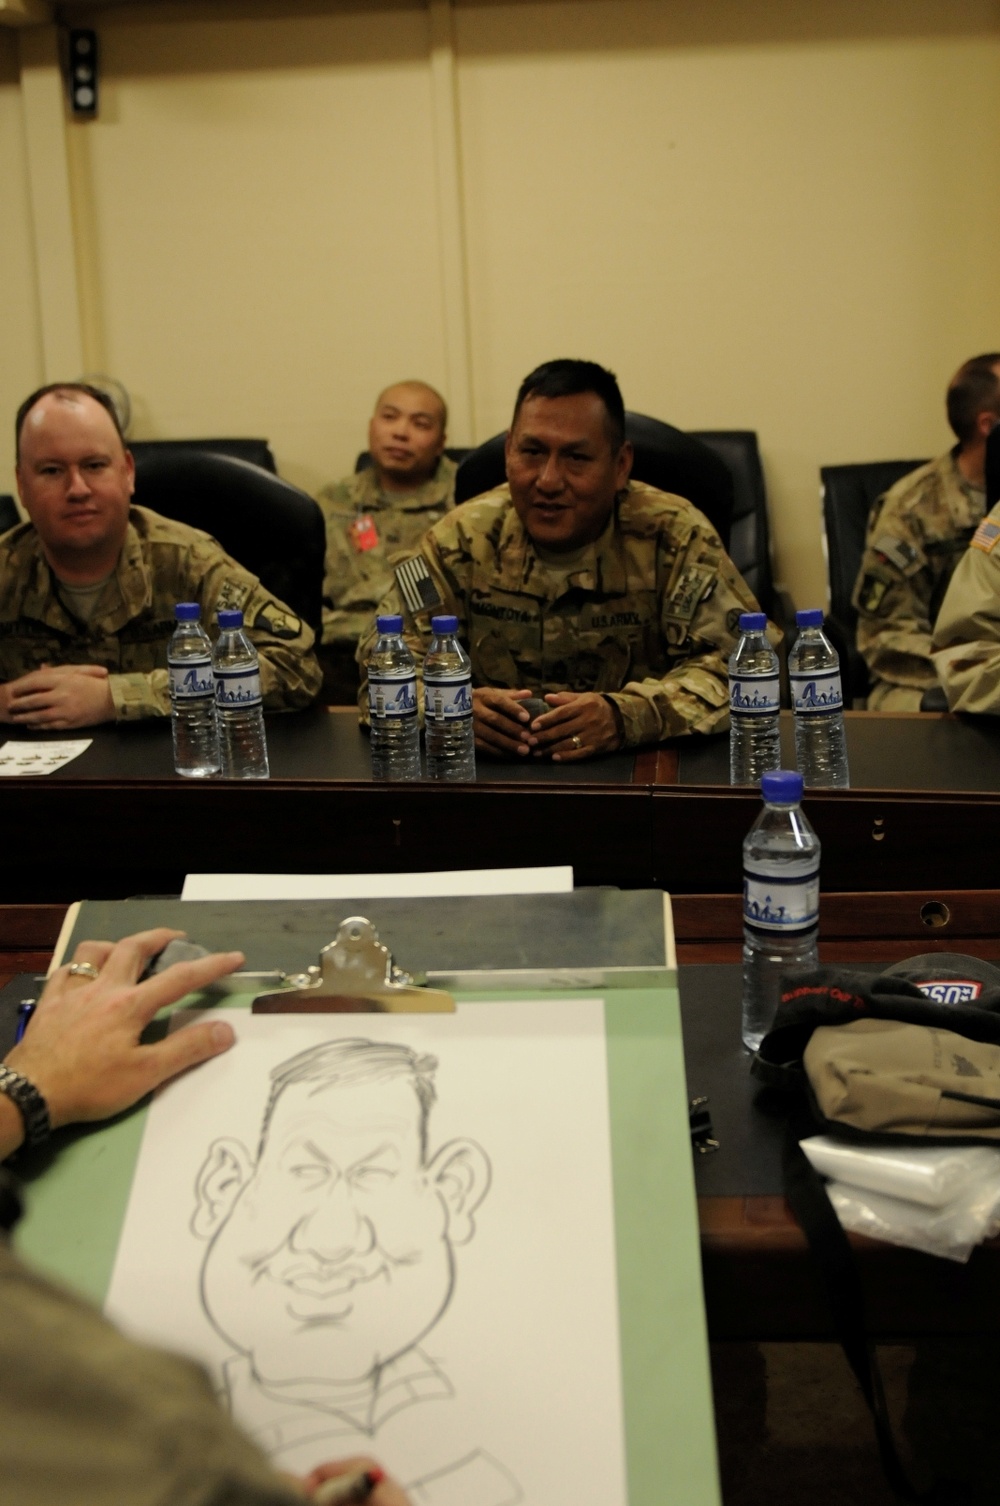 Cartooning the troops